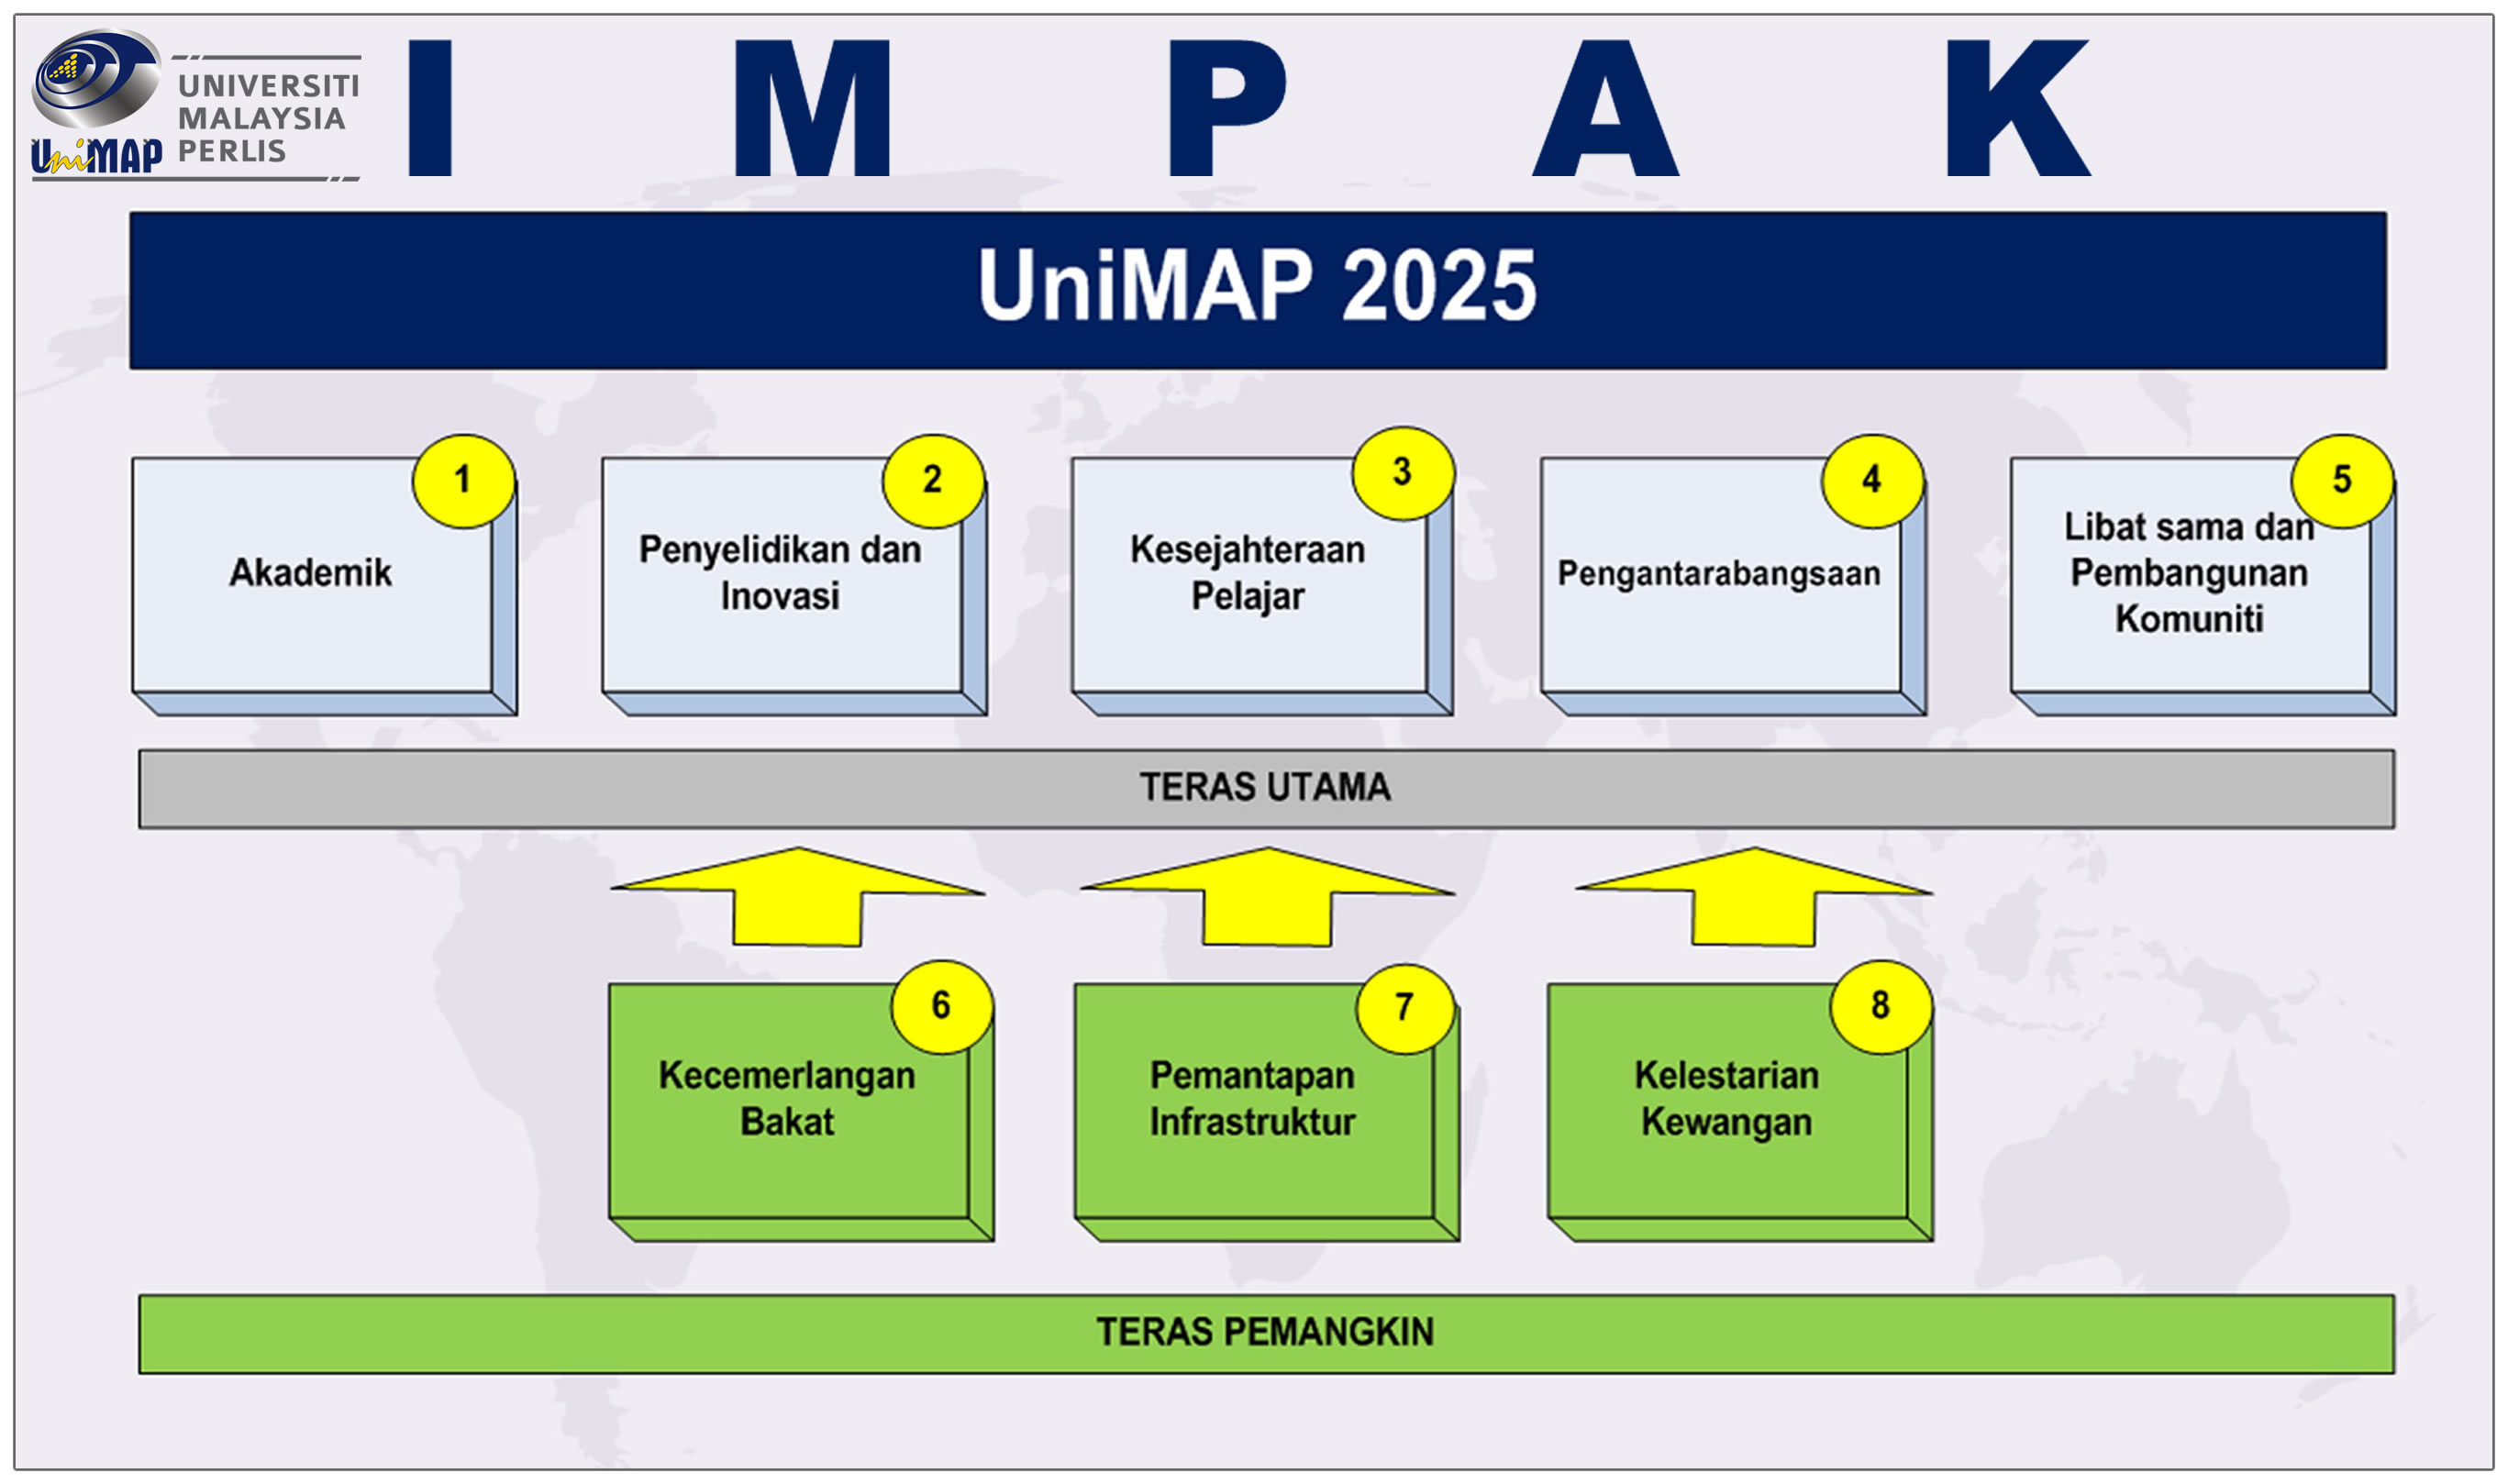 UniMAP Universiti Malaysia Perlis - Peta Impak UniMAP